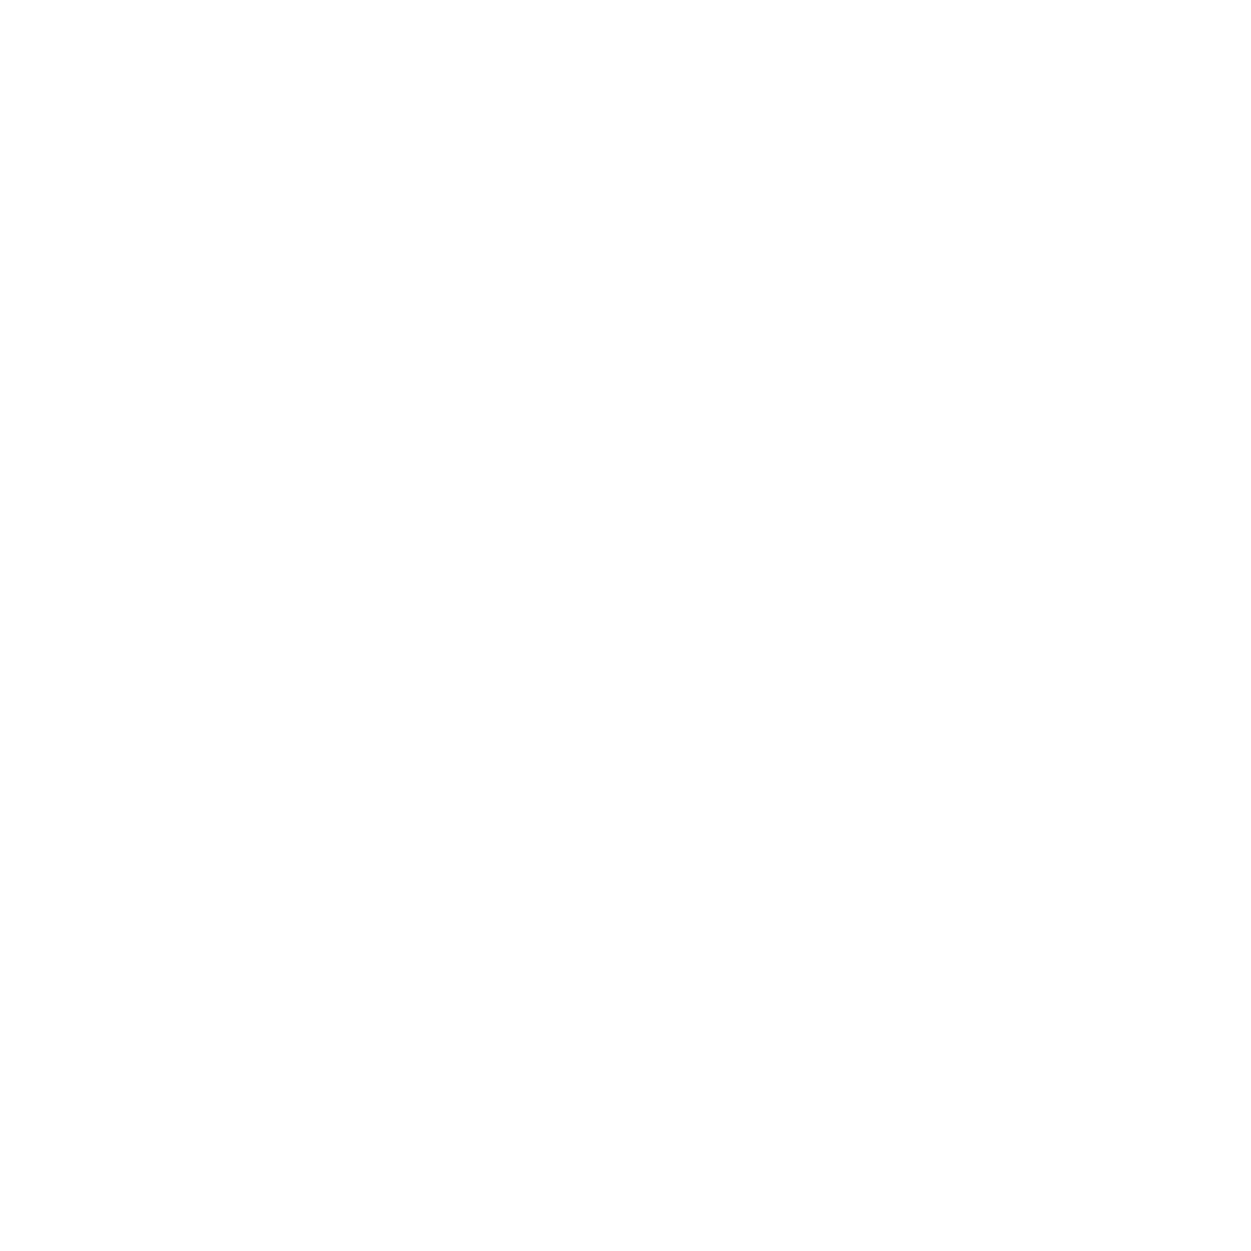 Logo WIND